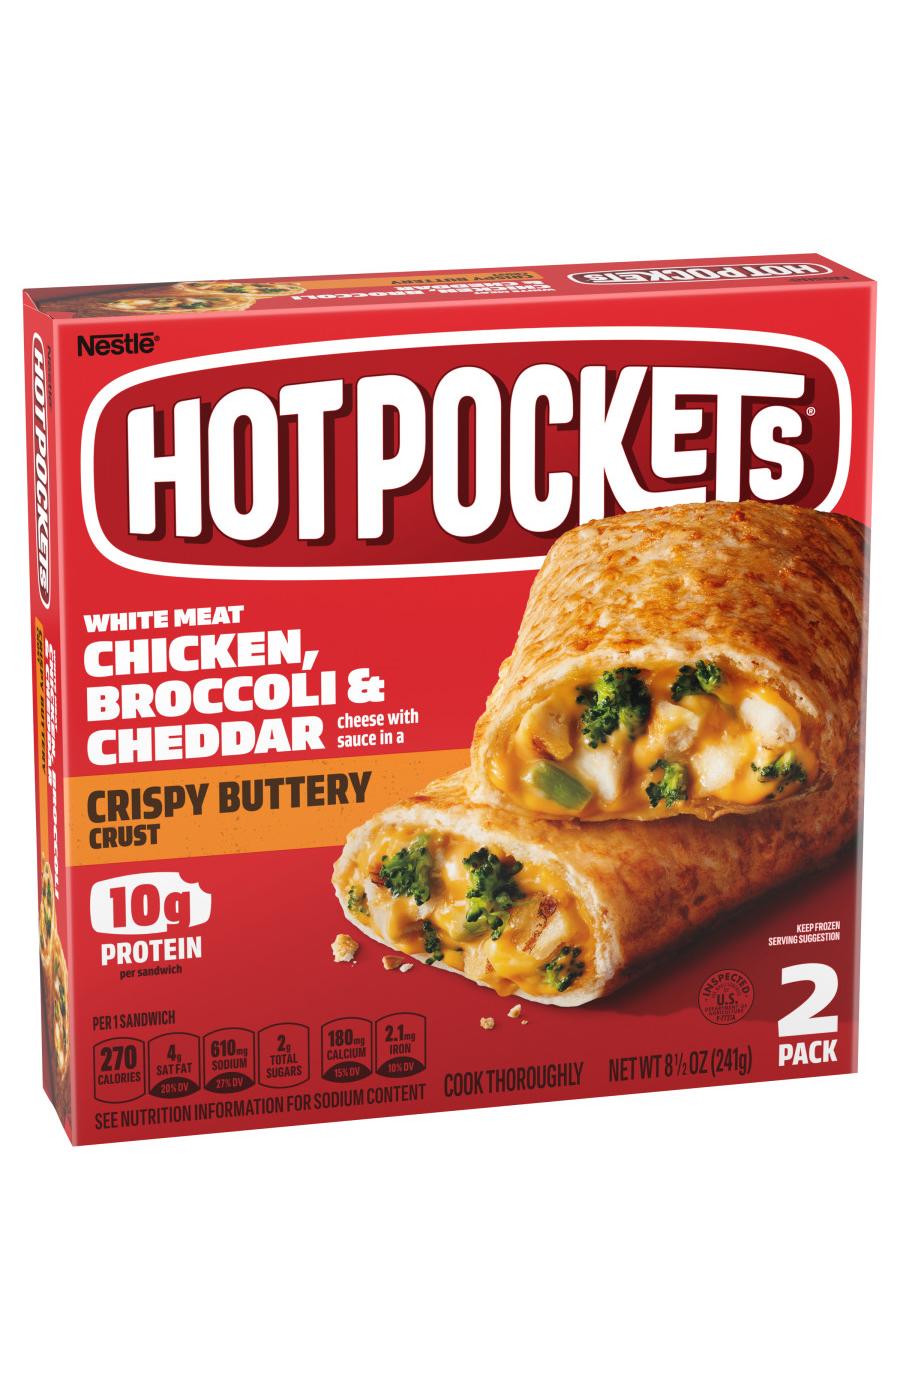 Hot Pockets Chicken, Broccoli & Cheddar Crispy Buttery Crust Frozen Snacks; image 1 of 8